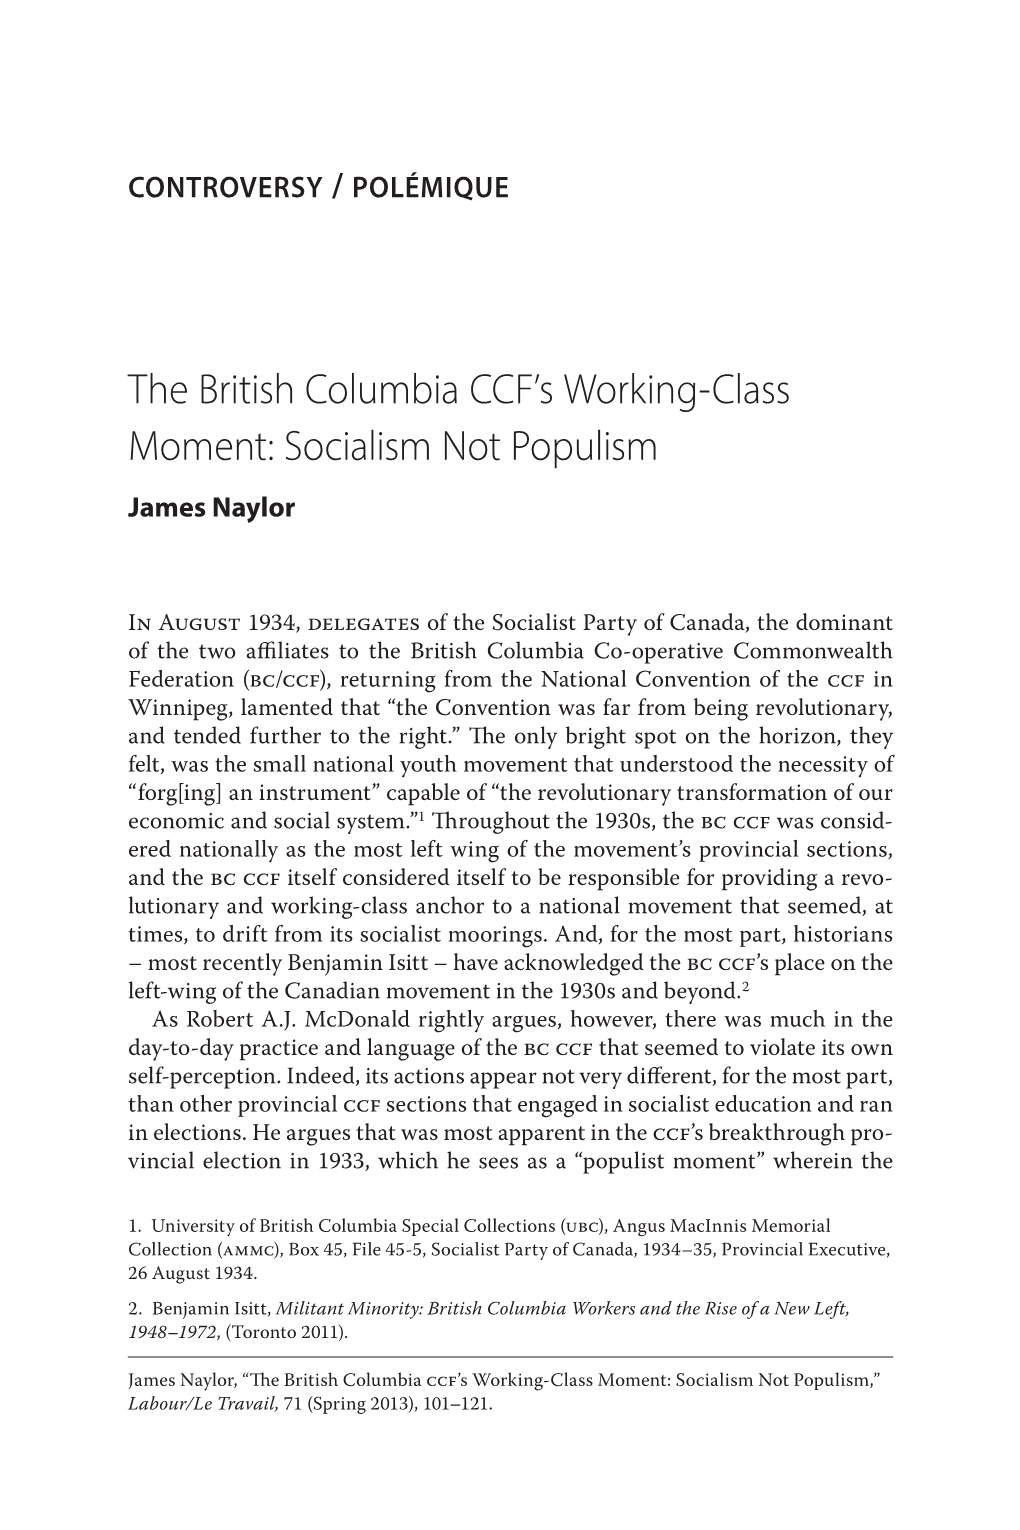 The British Columbia CCF's Working-Class